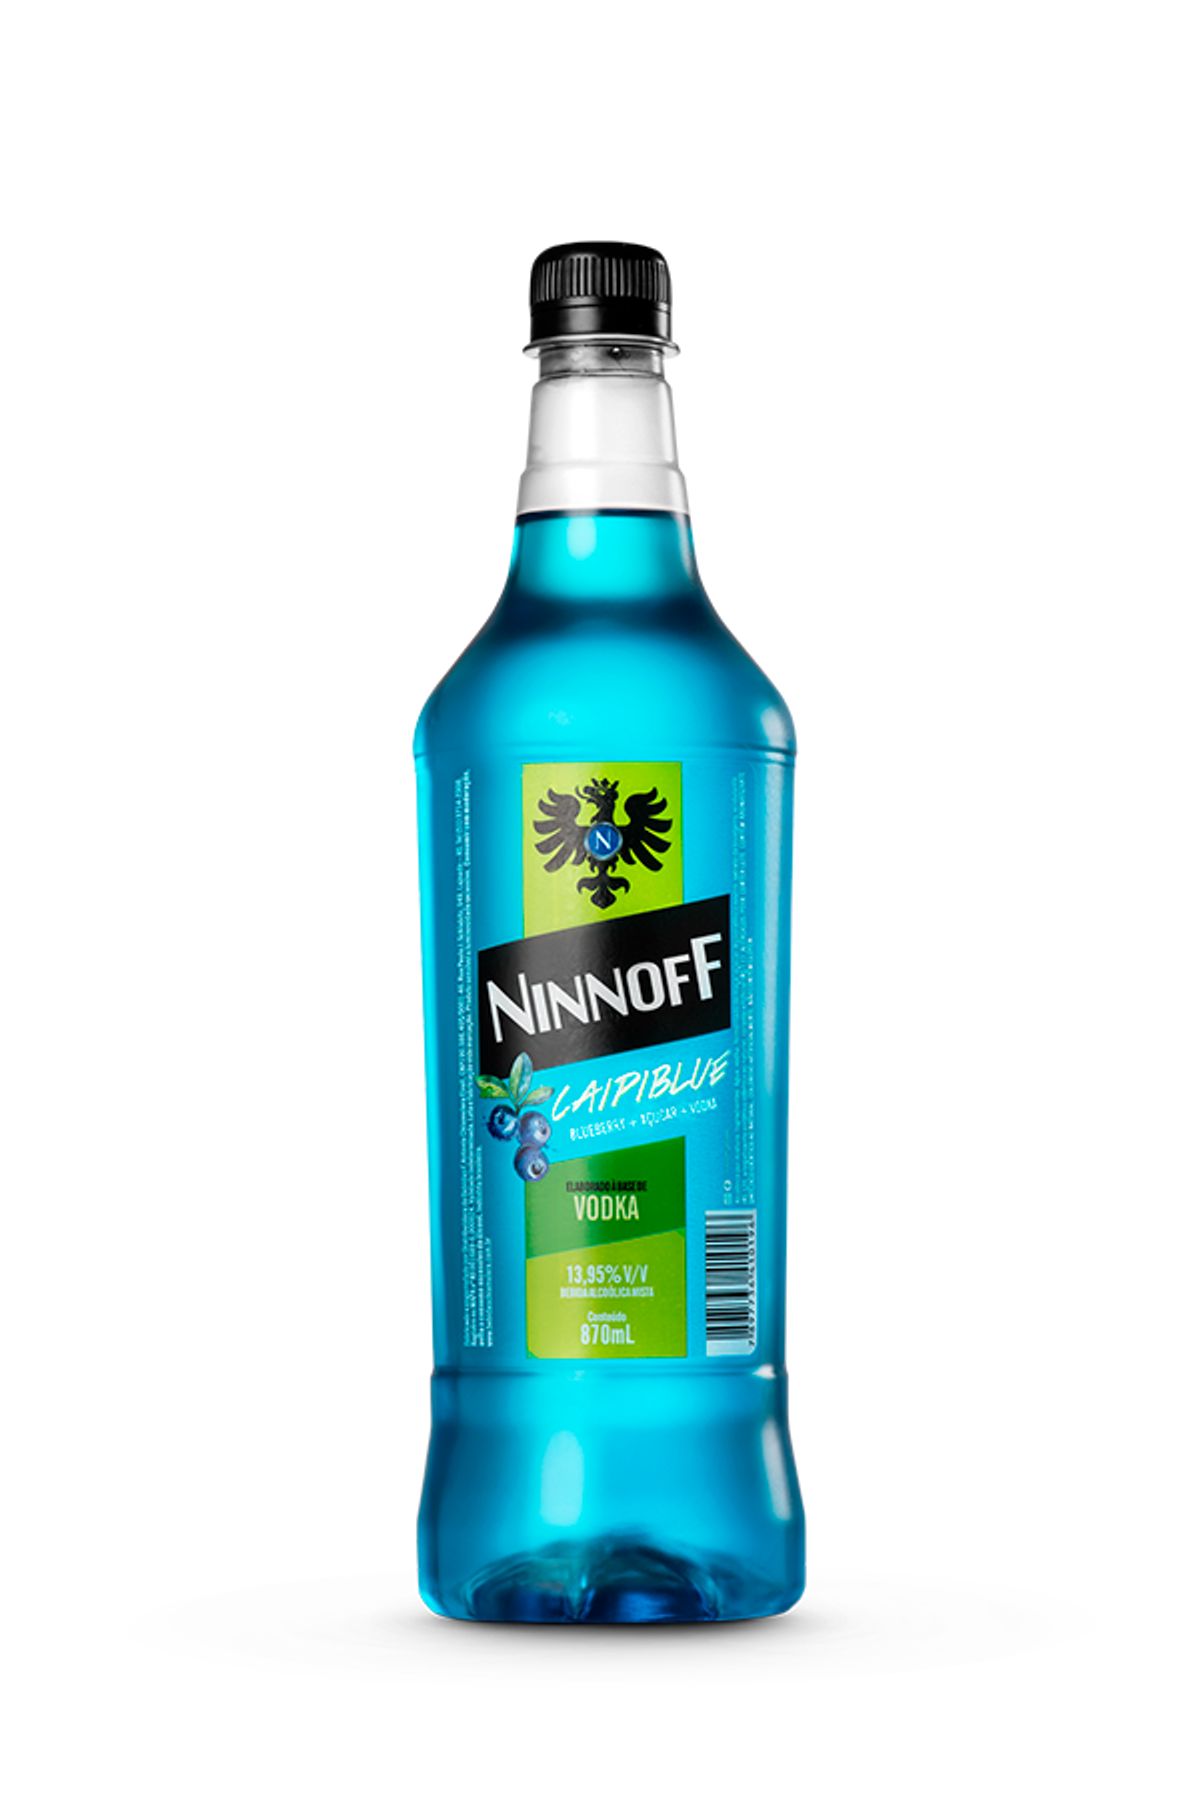 Bebida Alcoólica Mista Ninnoff Caipiblue Pet 870ml